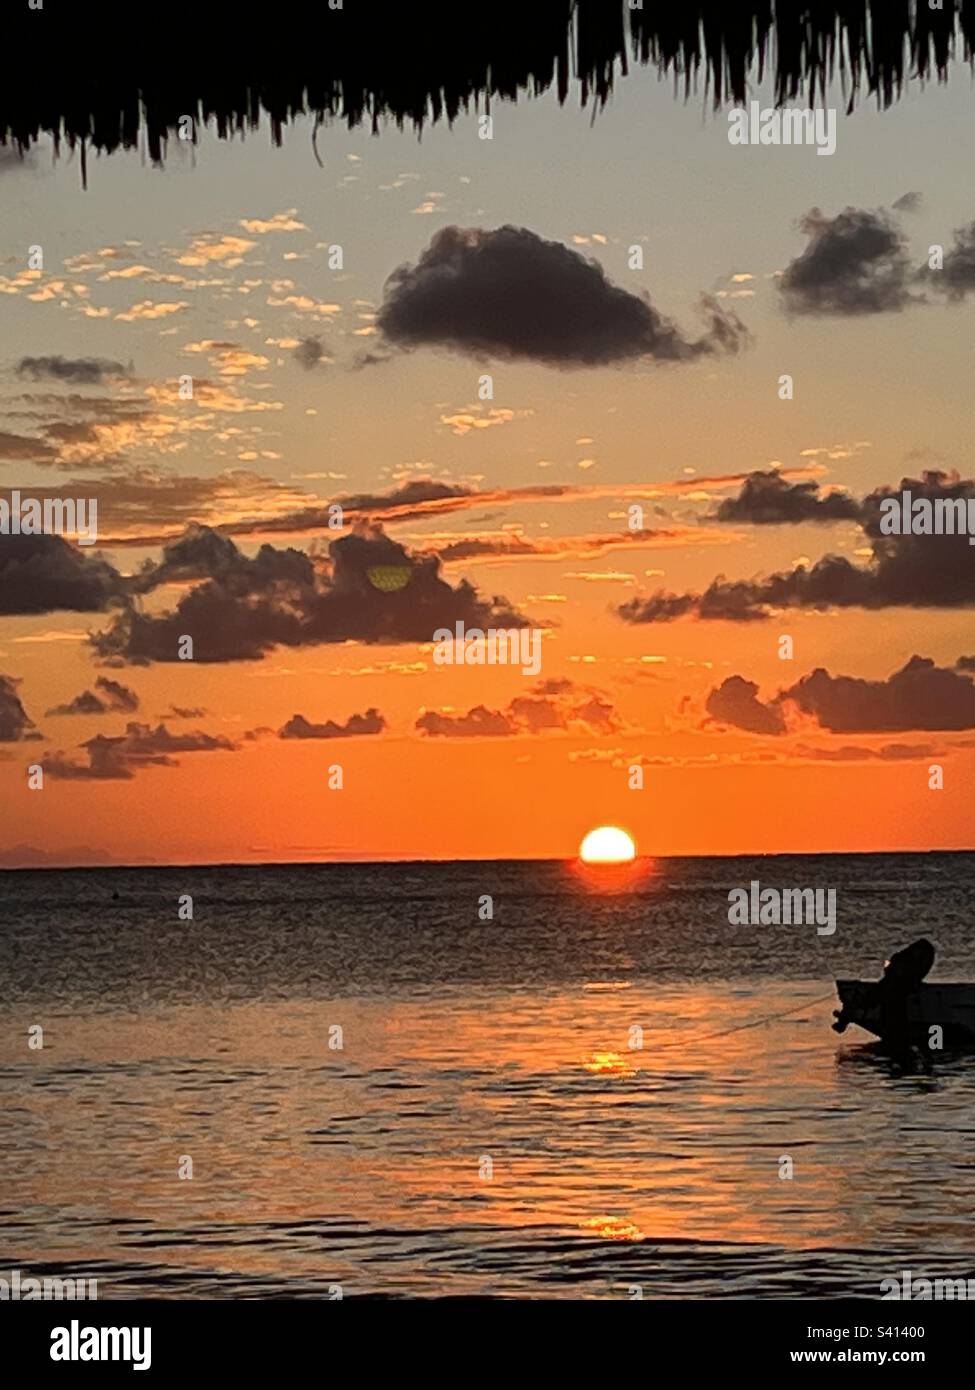 Beach, Cozumel, Mexico, Sunset, Sundown, Dusk, Twilight, Sea, Clouds, boat, Palapa, Sand, Horizon, Romantic evening, Sun, Orange and blue sky Stock Photo